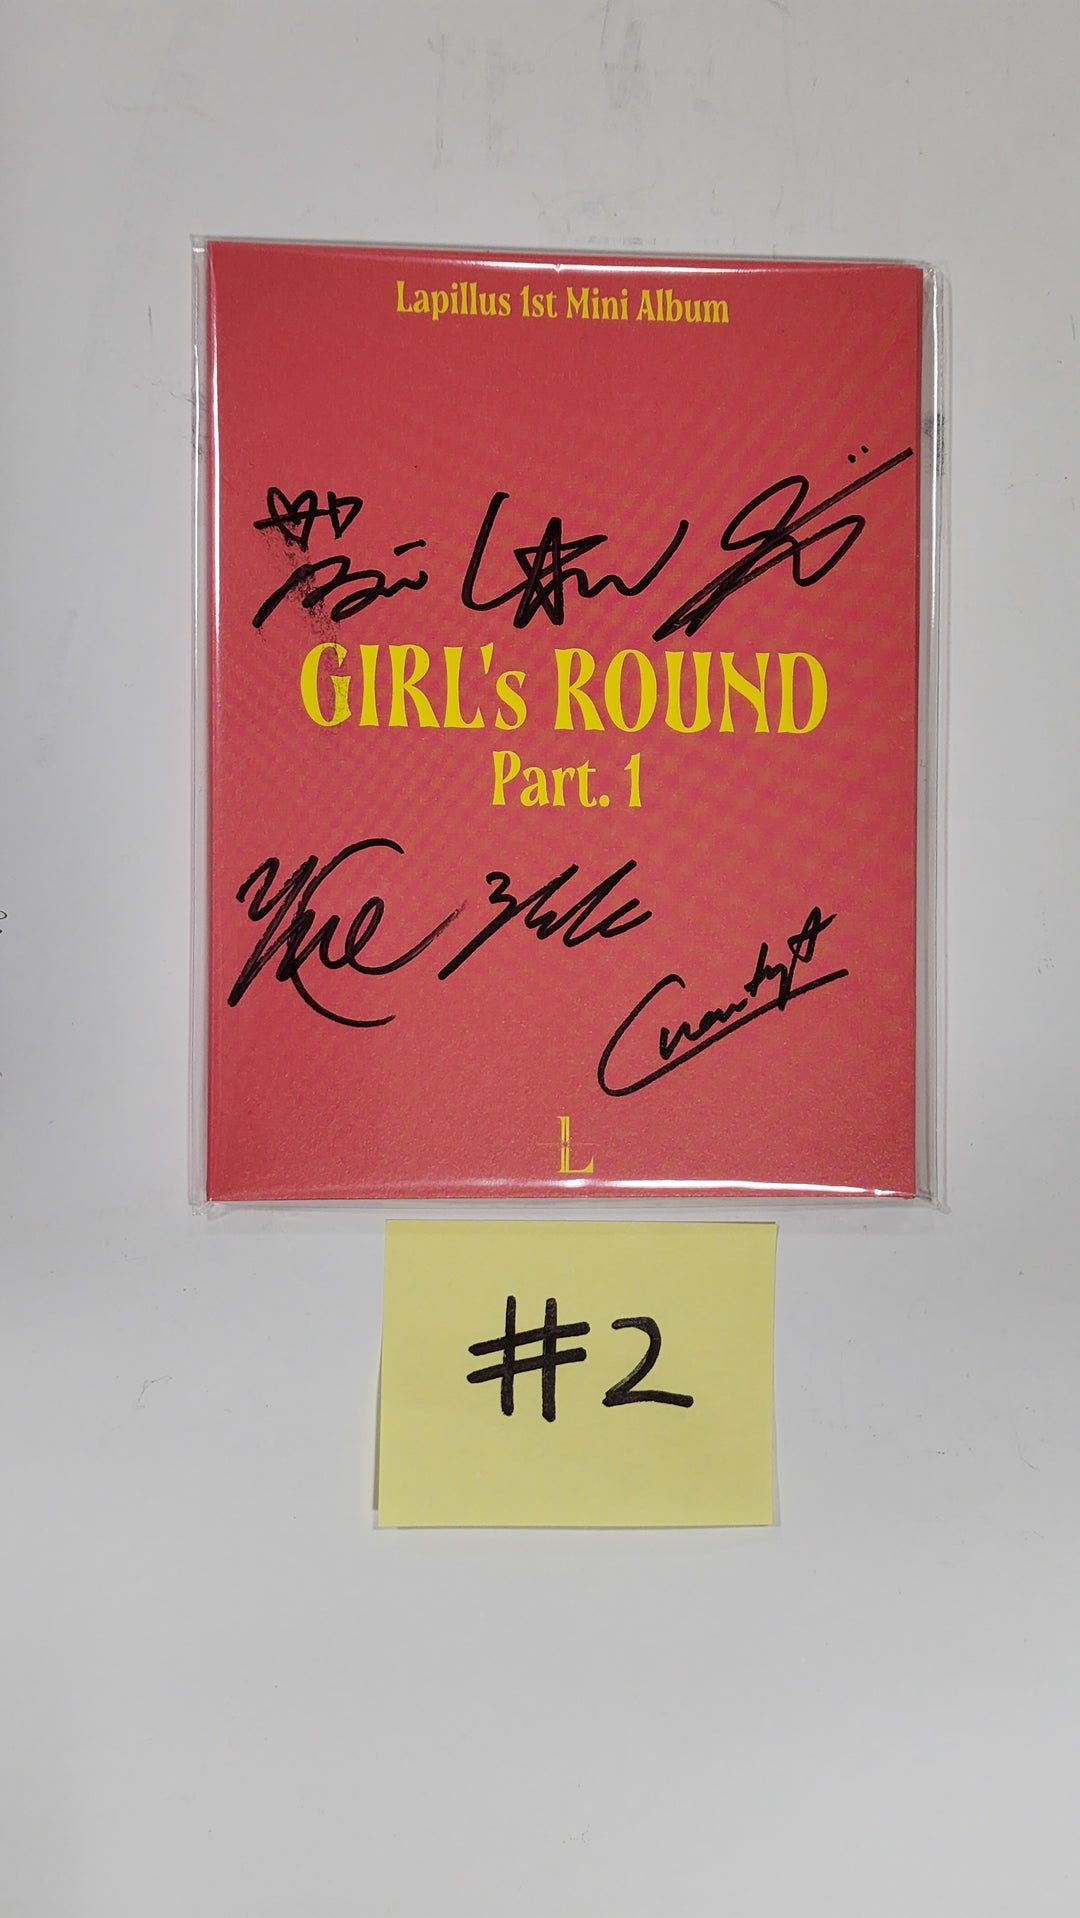 Lapillus "GIRL's ROUND" [Platform Ver] - Hand Autographed(signed) Promo Album